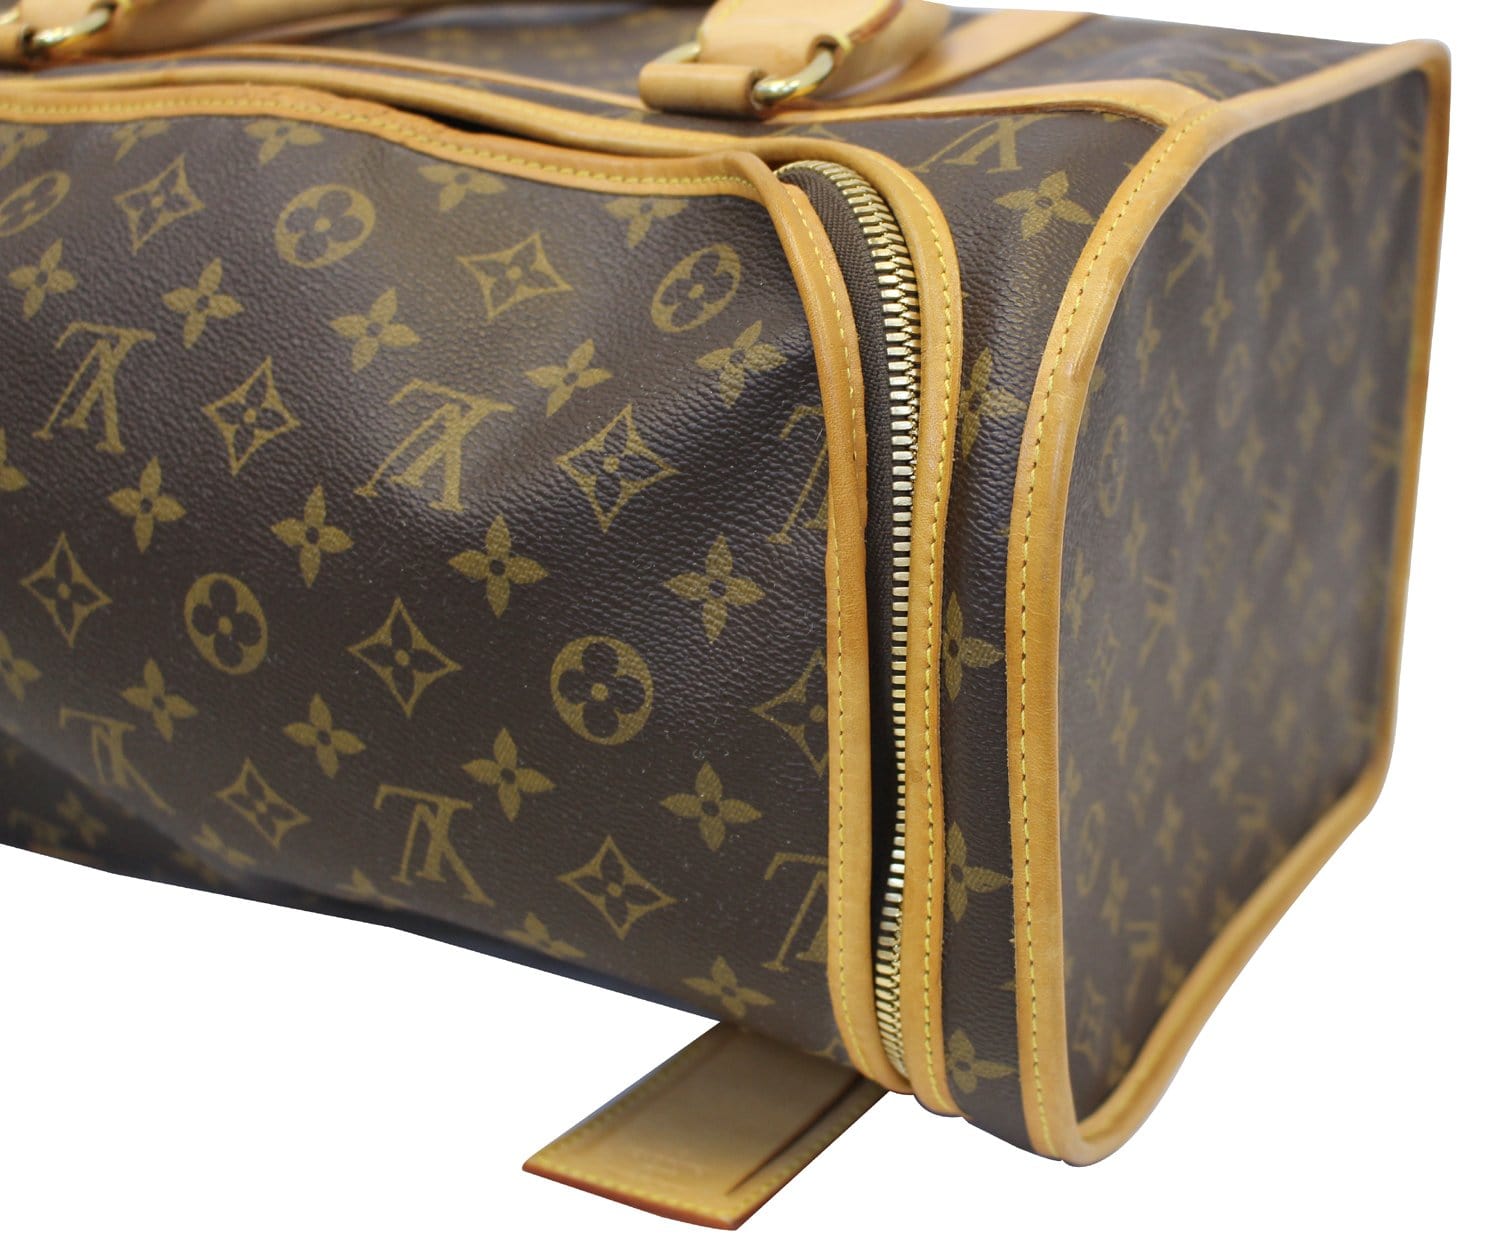 Bag > Louis Vuitton Dog Bag